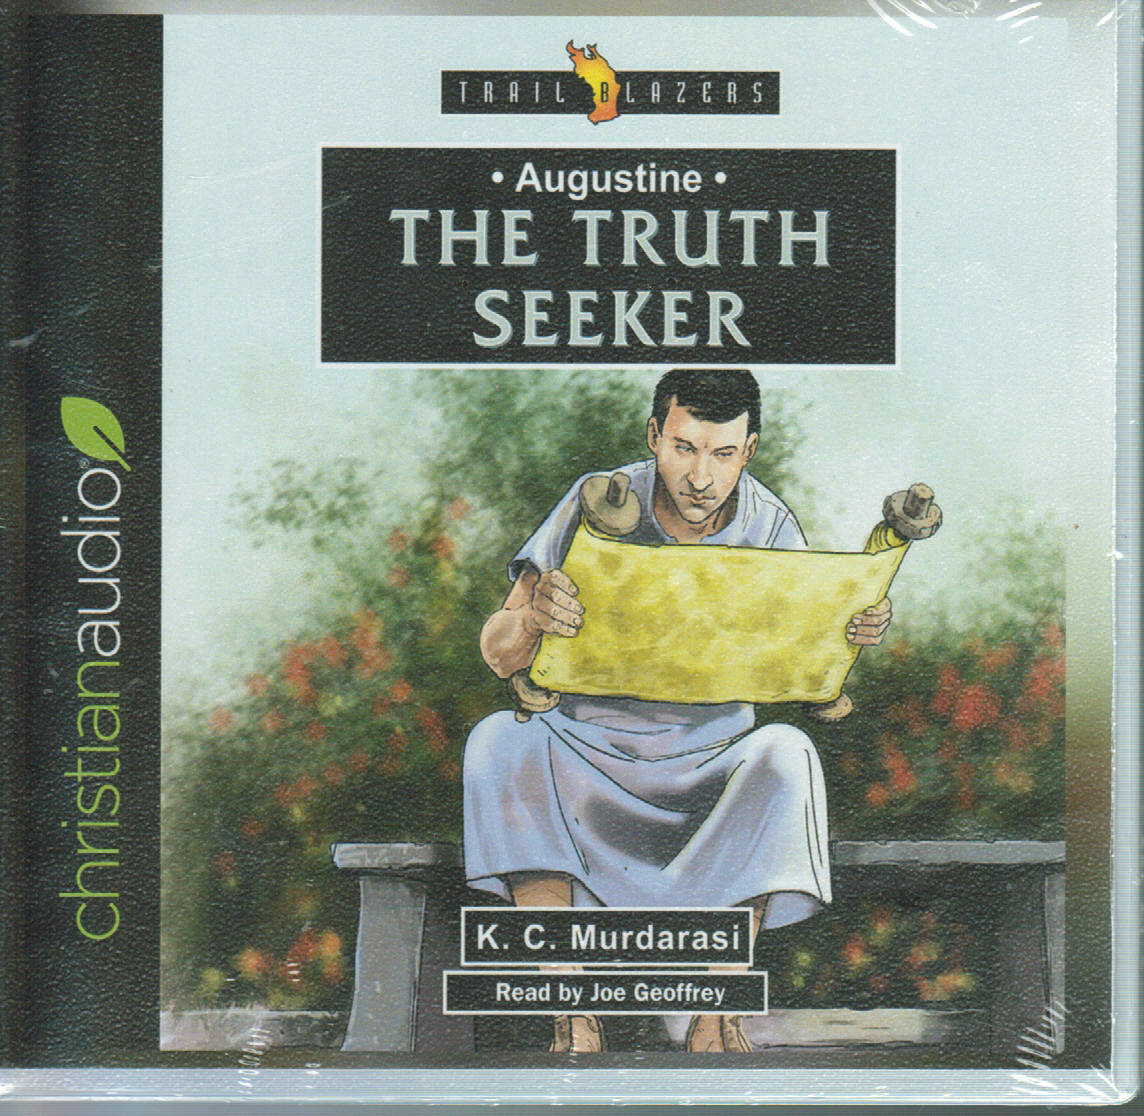 Trail Blazers - Augustine: The Truth Seeker - Audio Book